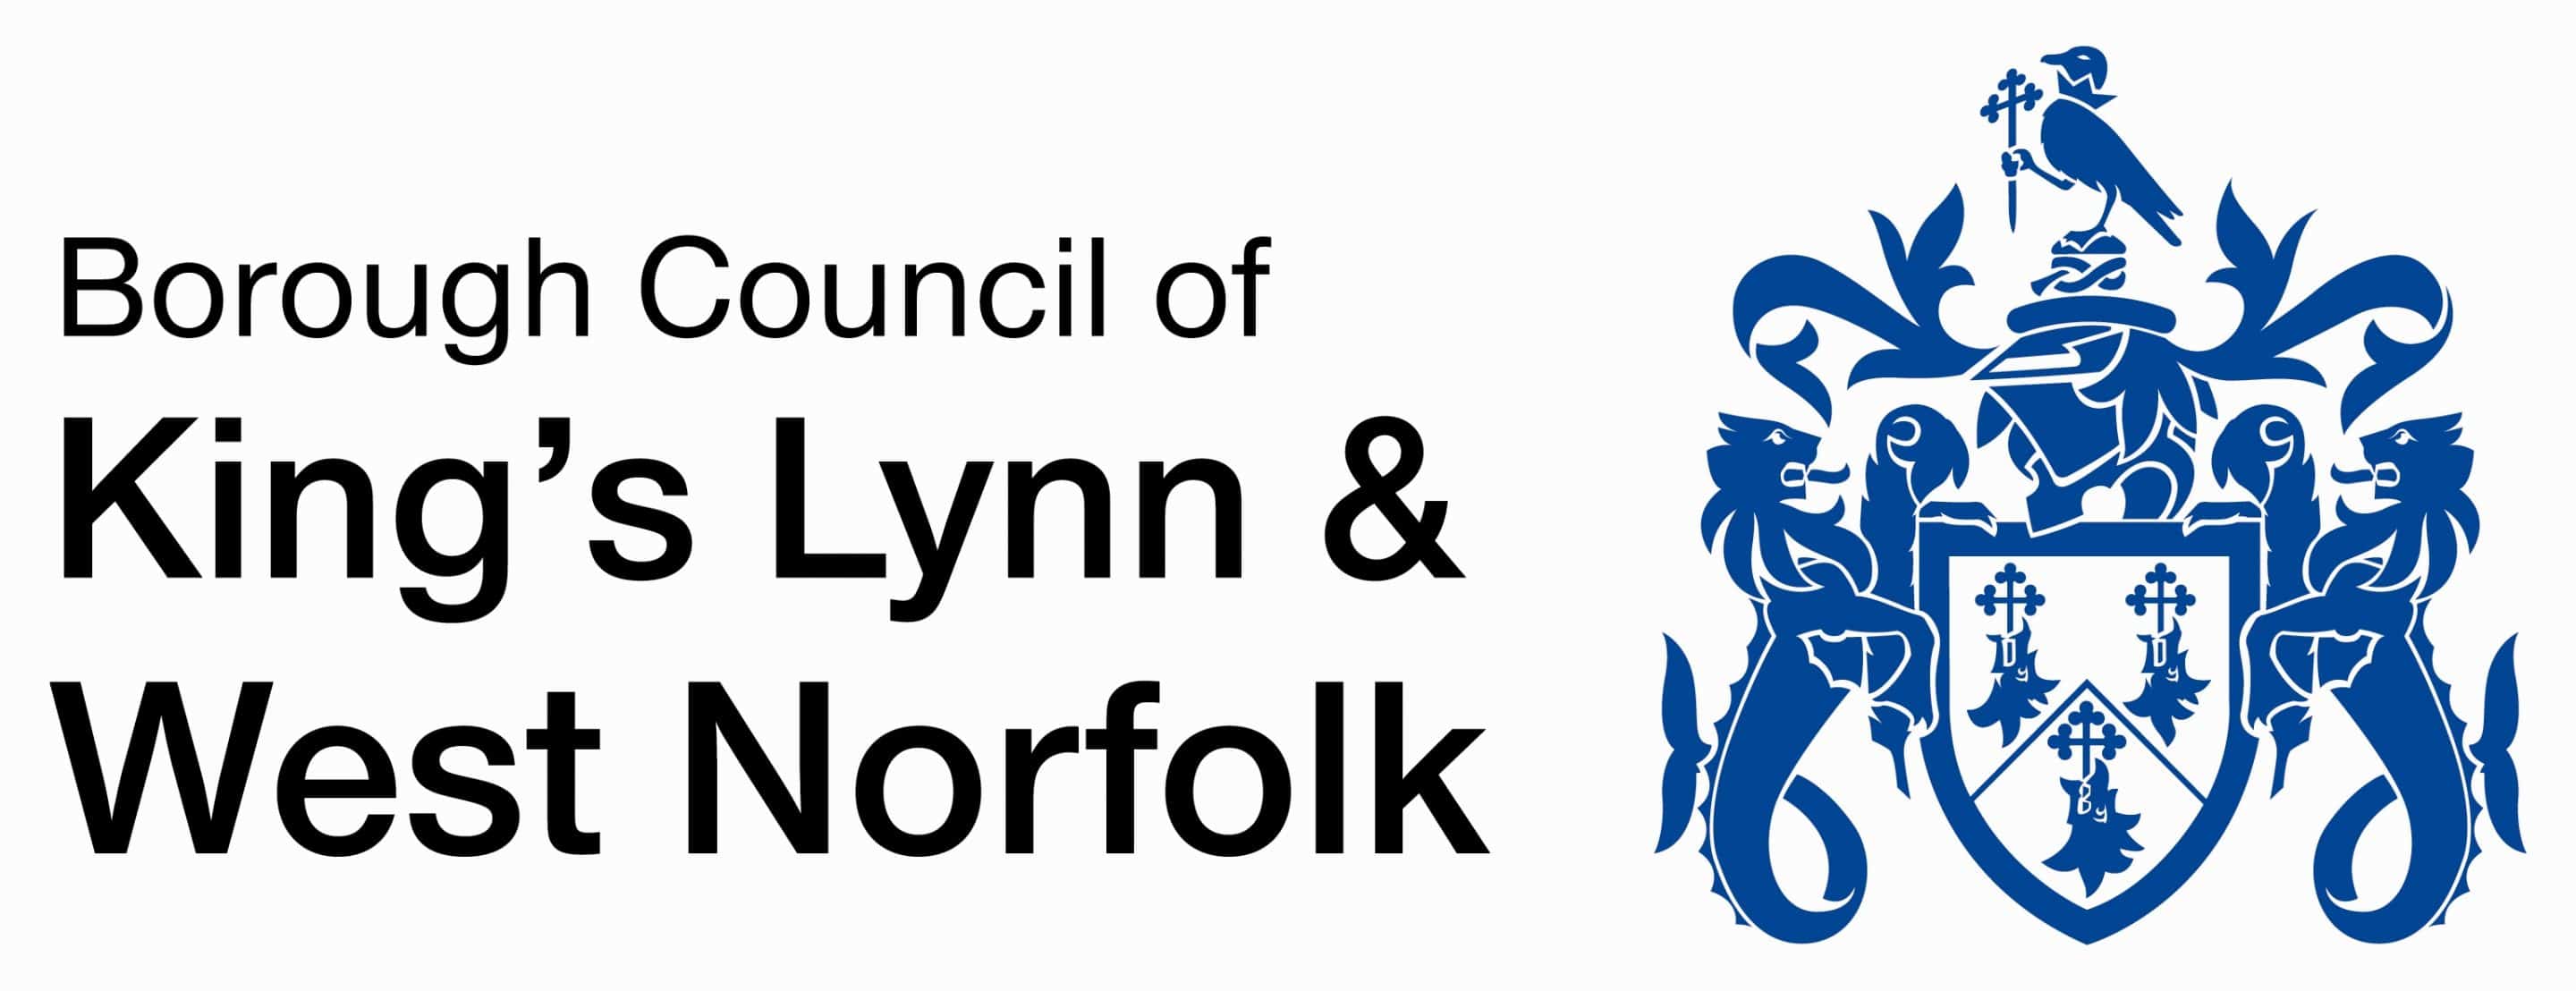 King’s Lynn and West Norfolk Borough Council logo